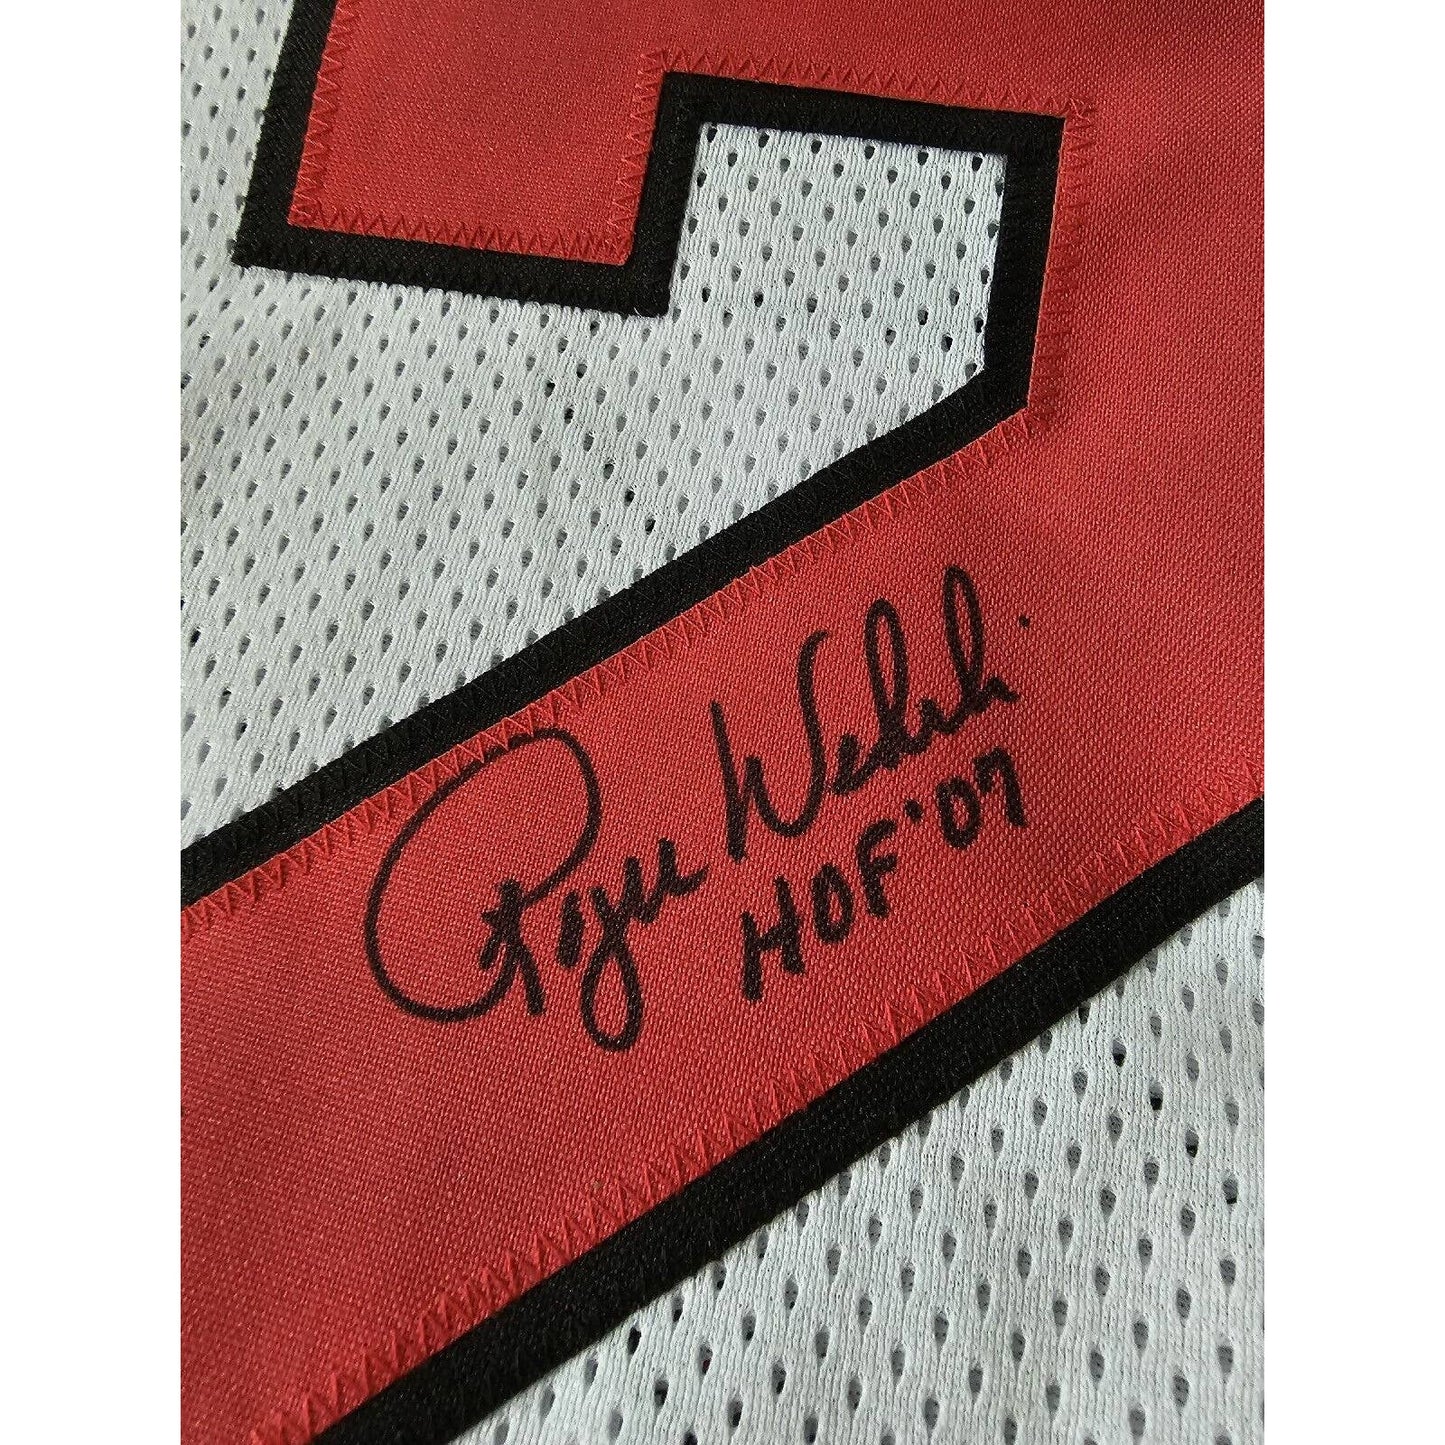 Roger Wehrli Autographed/Signed Jersey JSA COA Arizona Cardinals Chicago Werhli